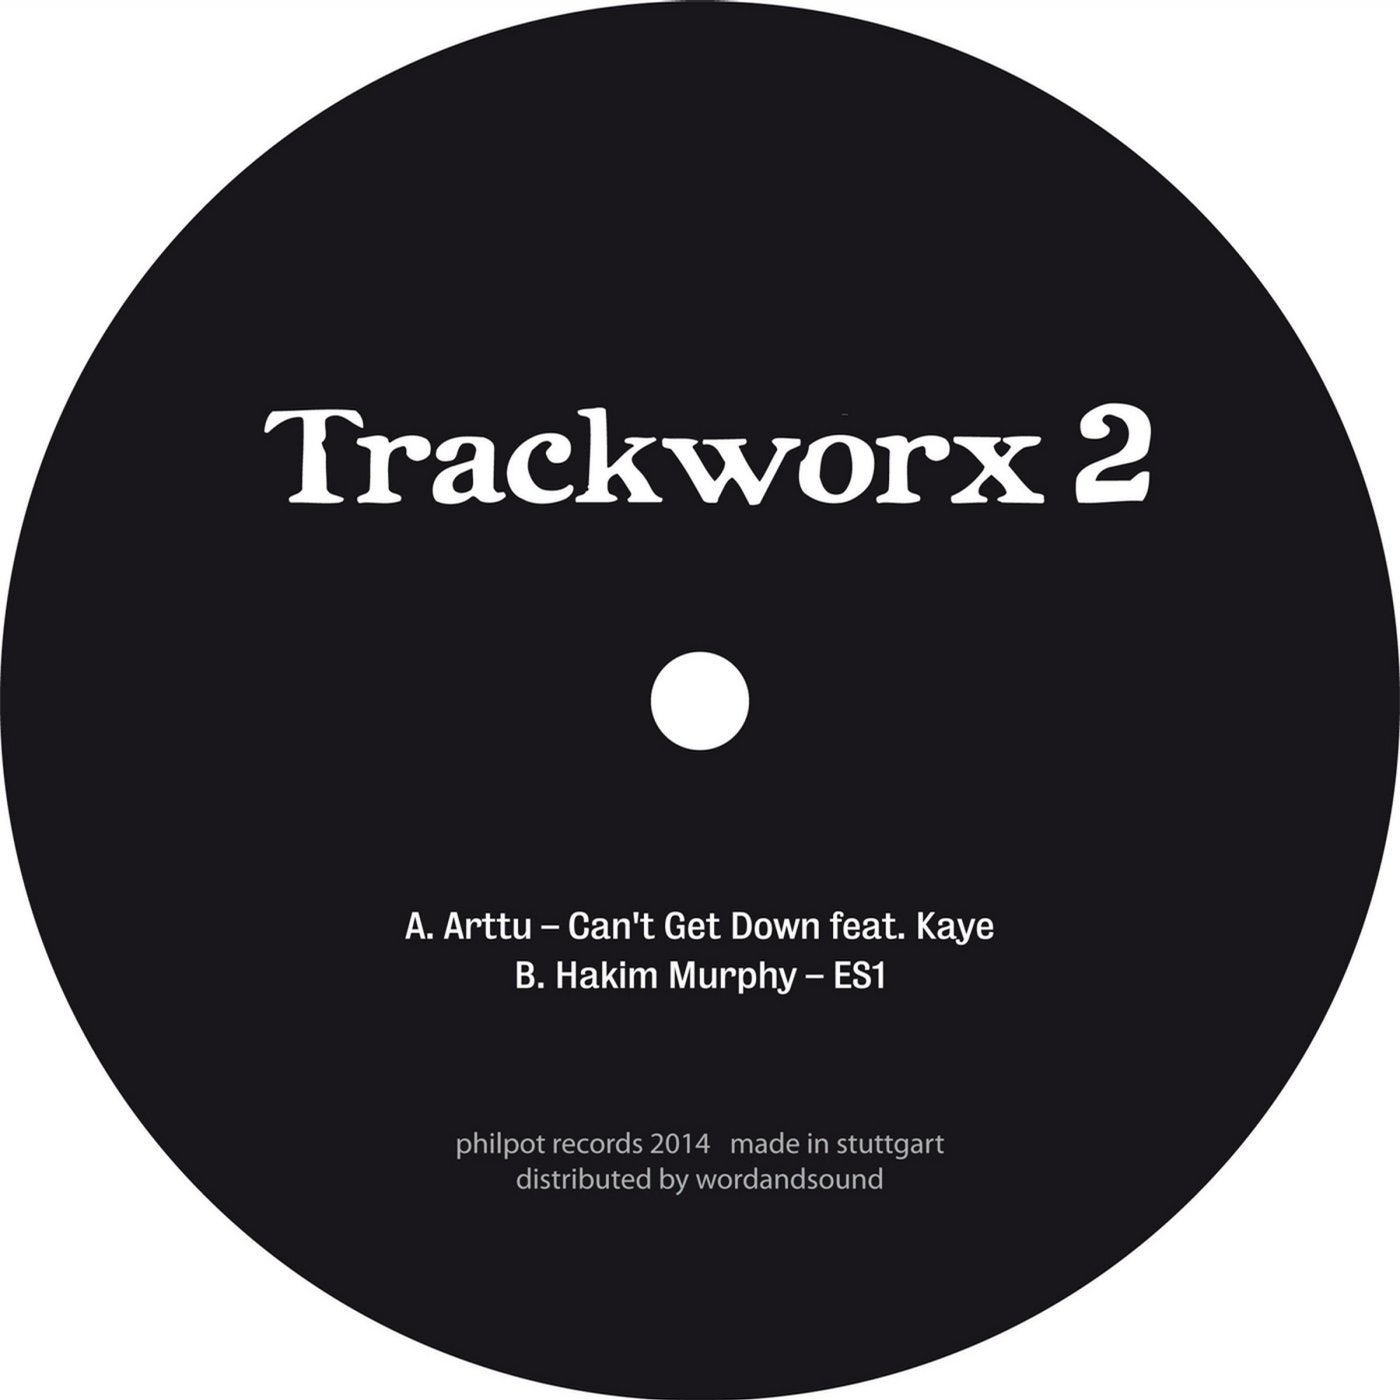 Trackworx 2